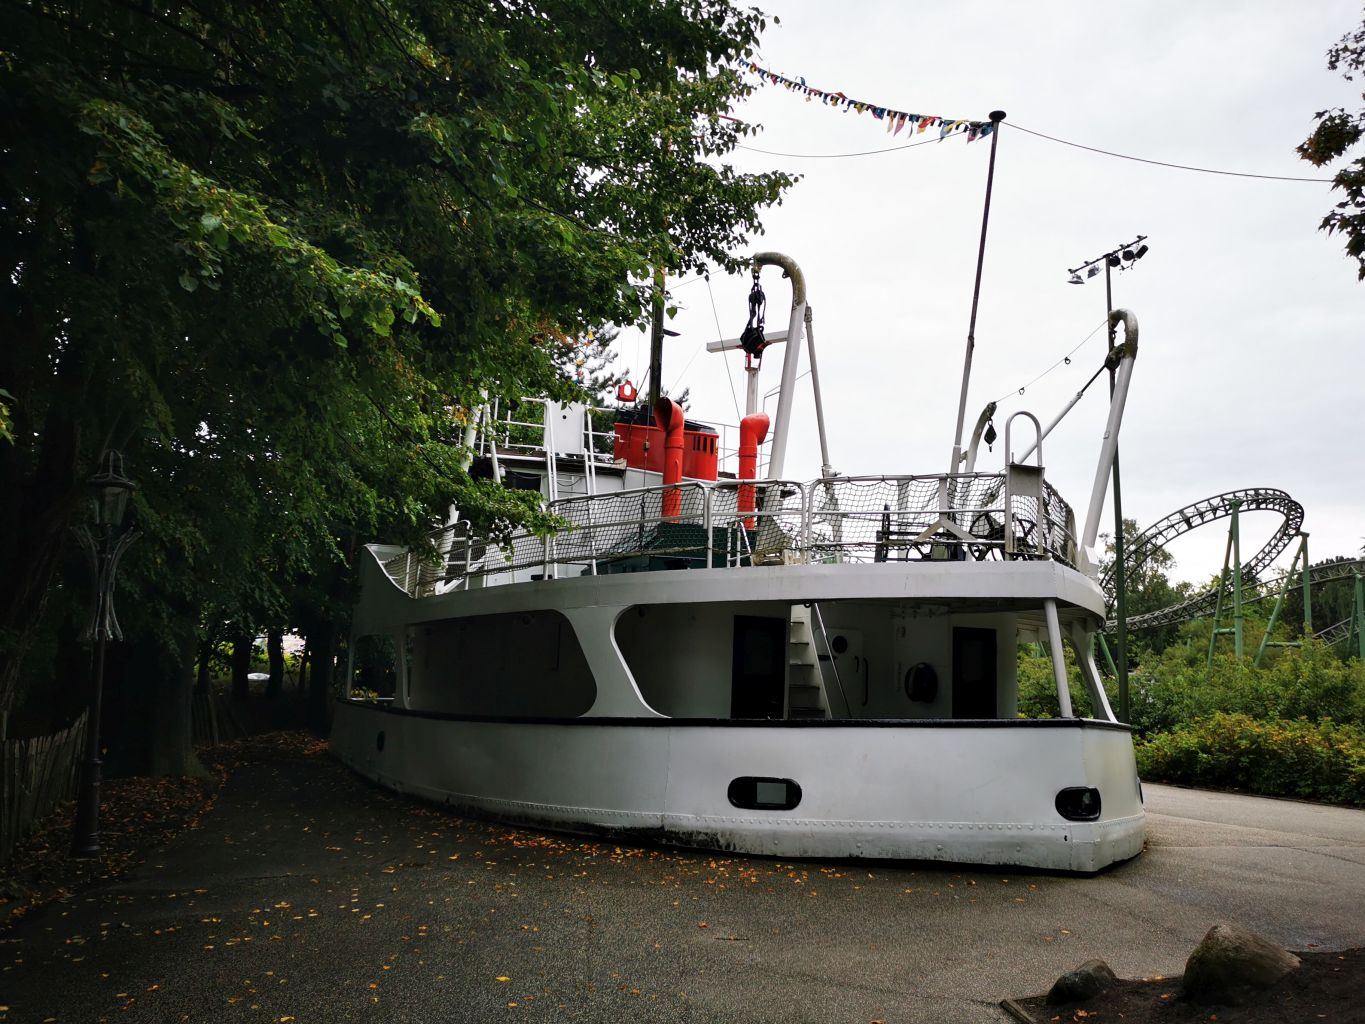 Küstenmotorschiff "Neuenfelde"